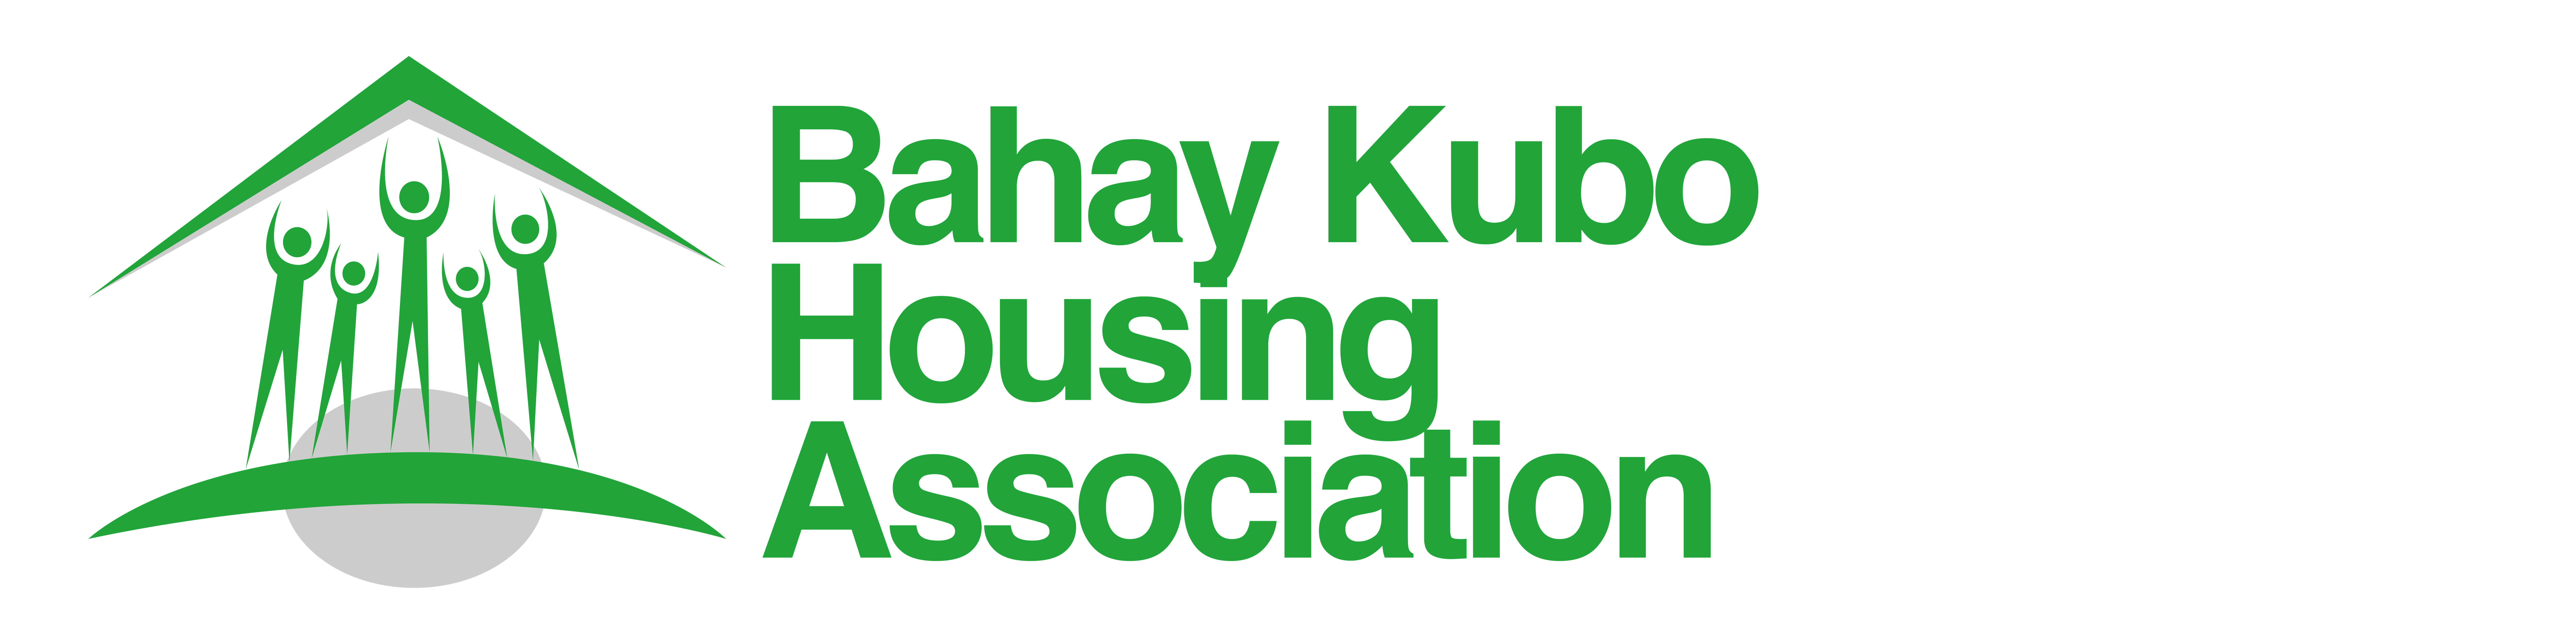 Bahay Kubo Housing Association